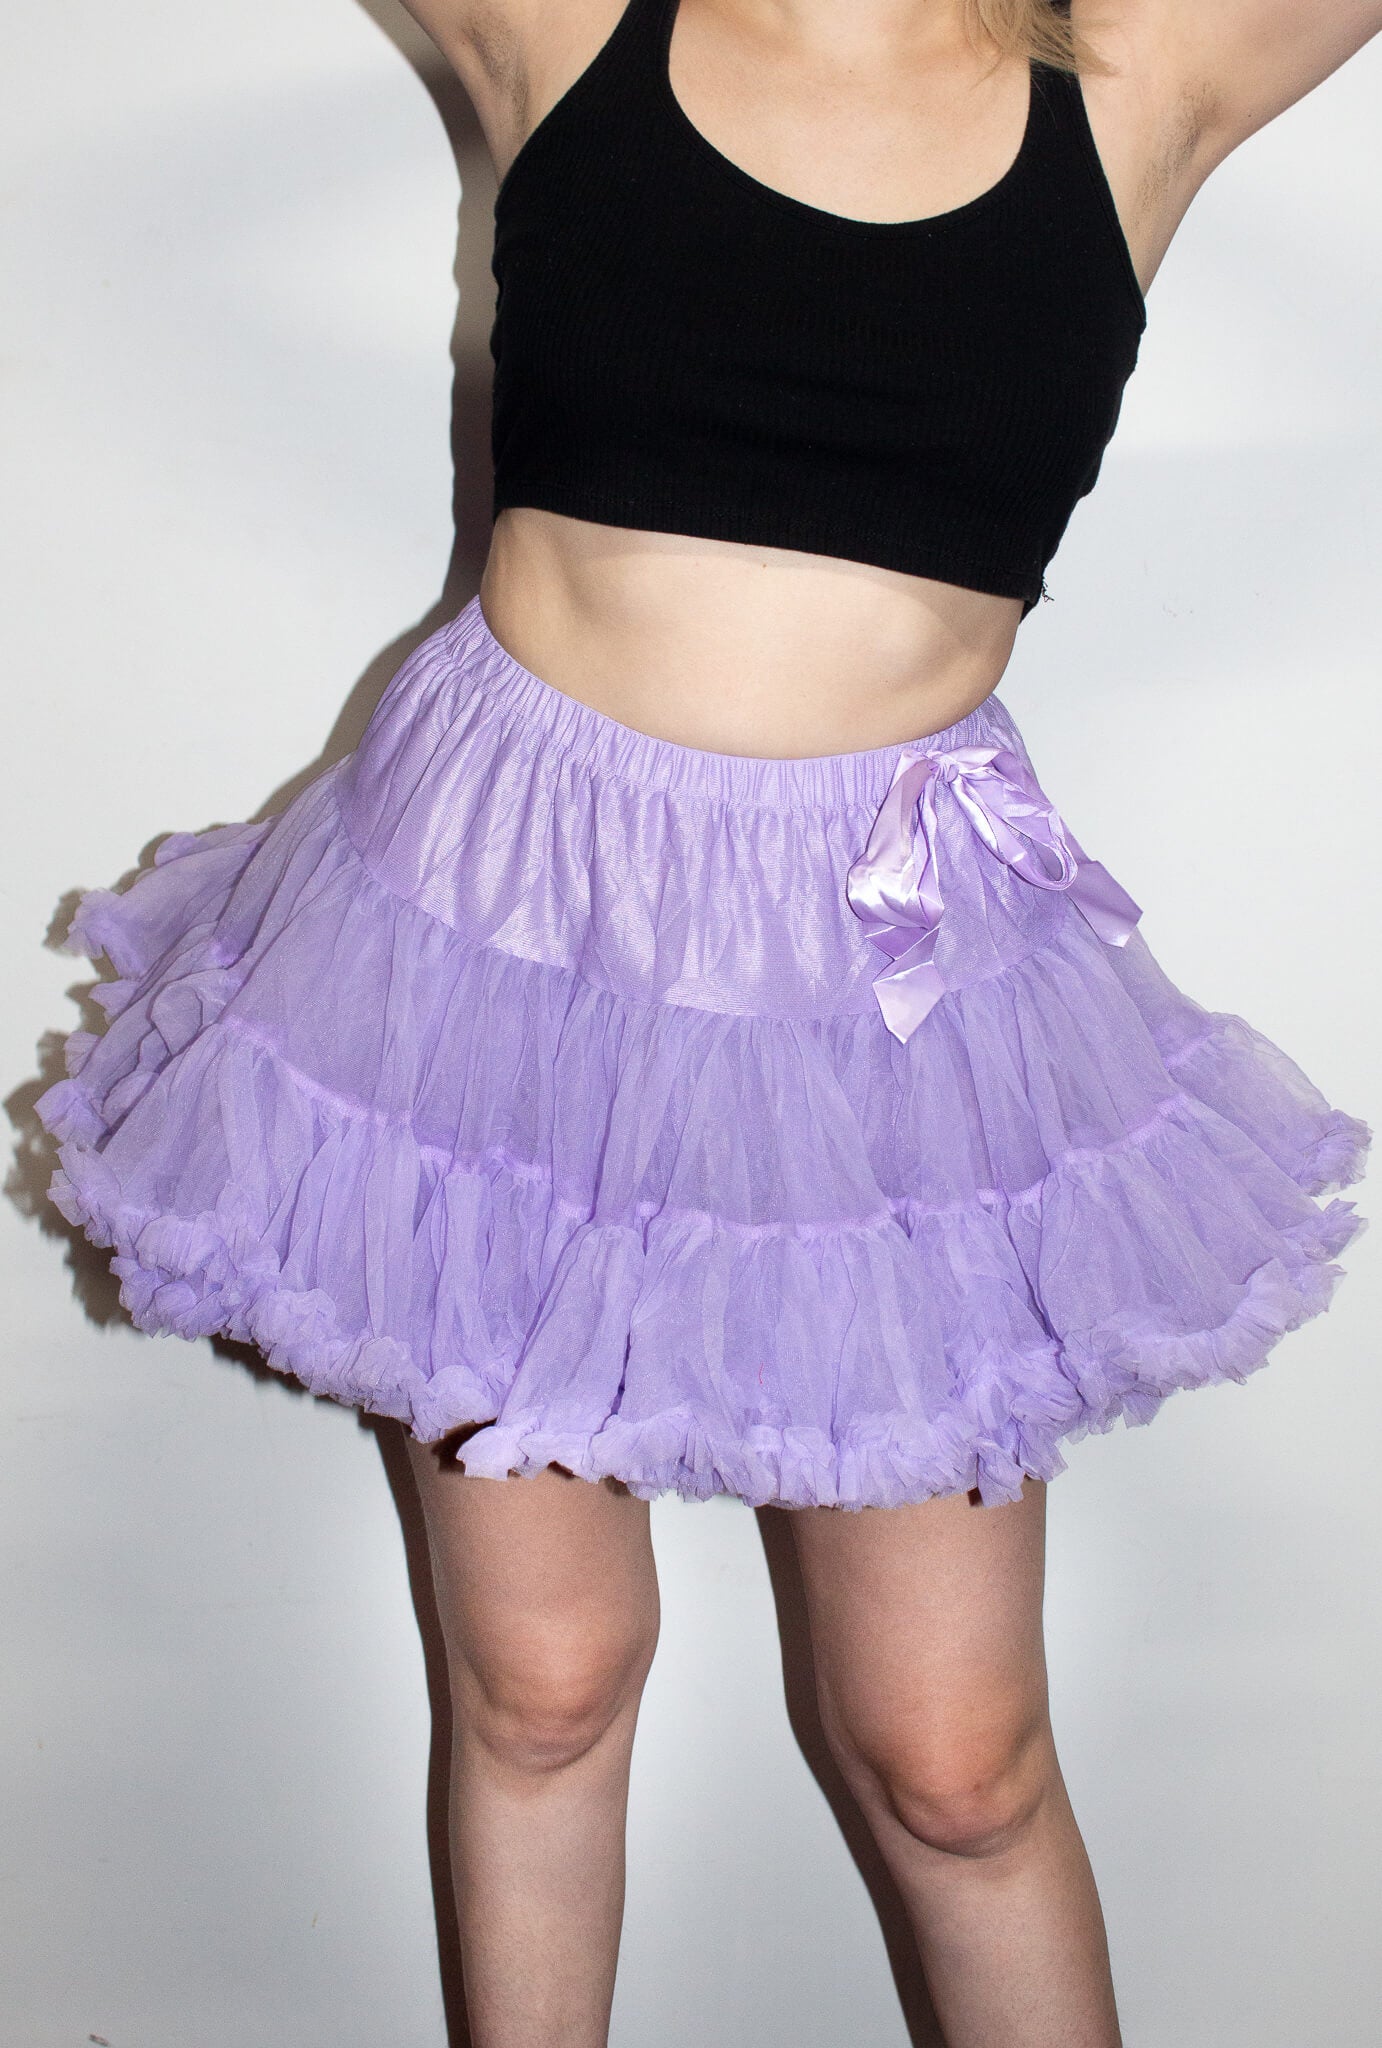 Deluxe Purple Petticoat